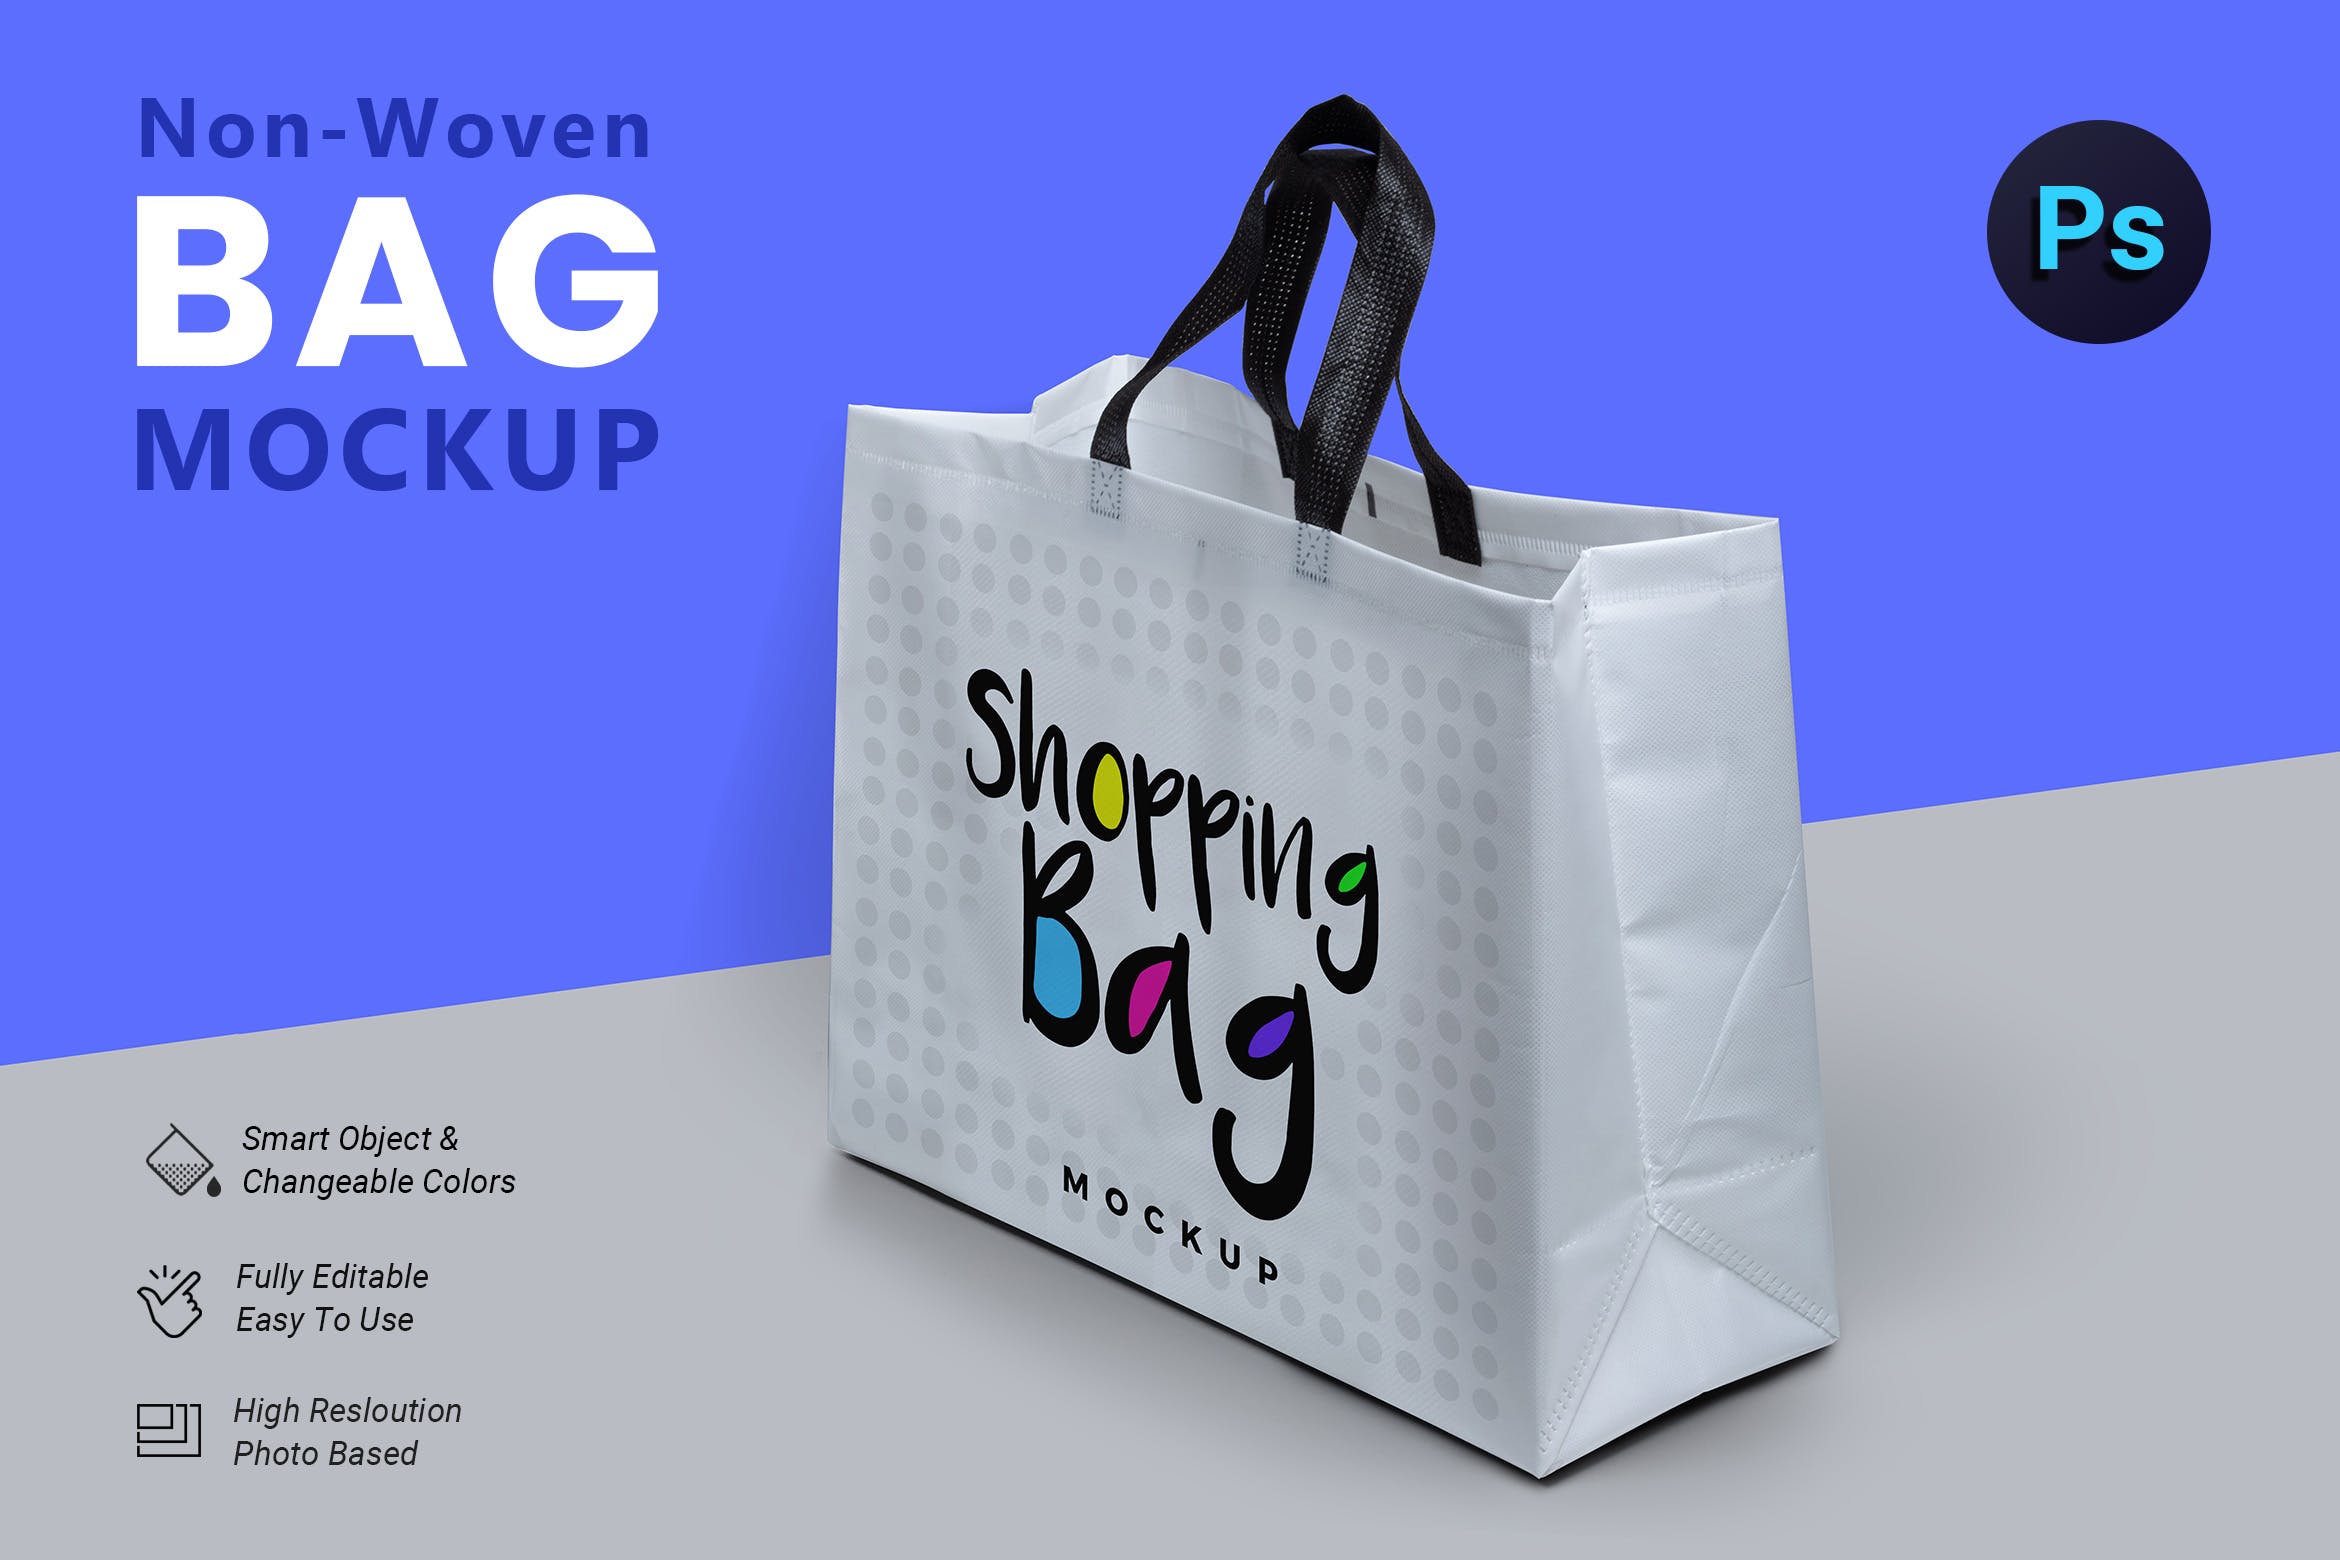 无纺布购物袋外观设计图素材库精选 Non Woven Bag Mockup插图